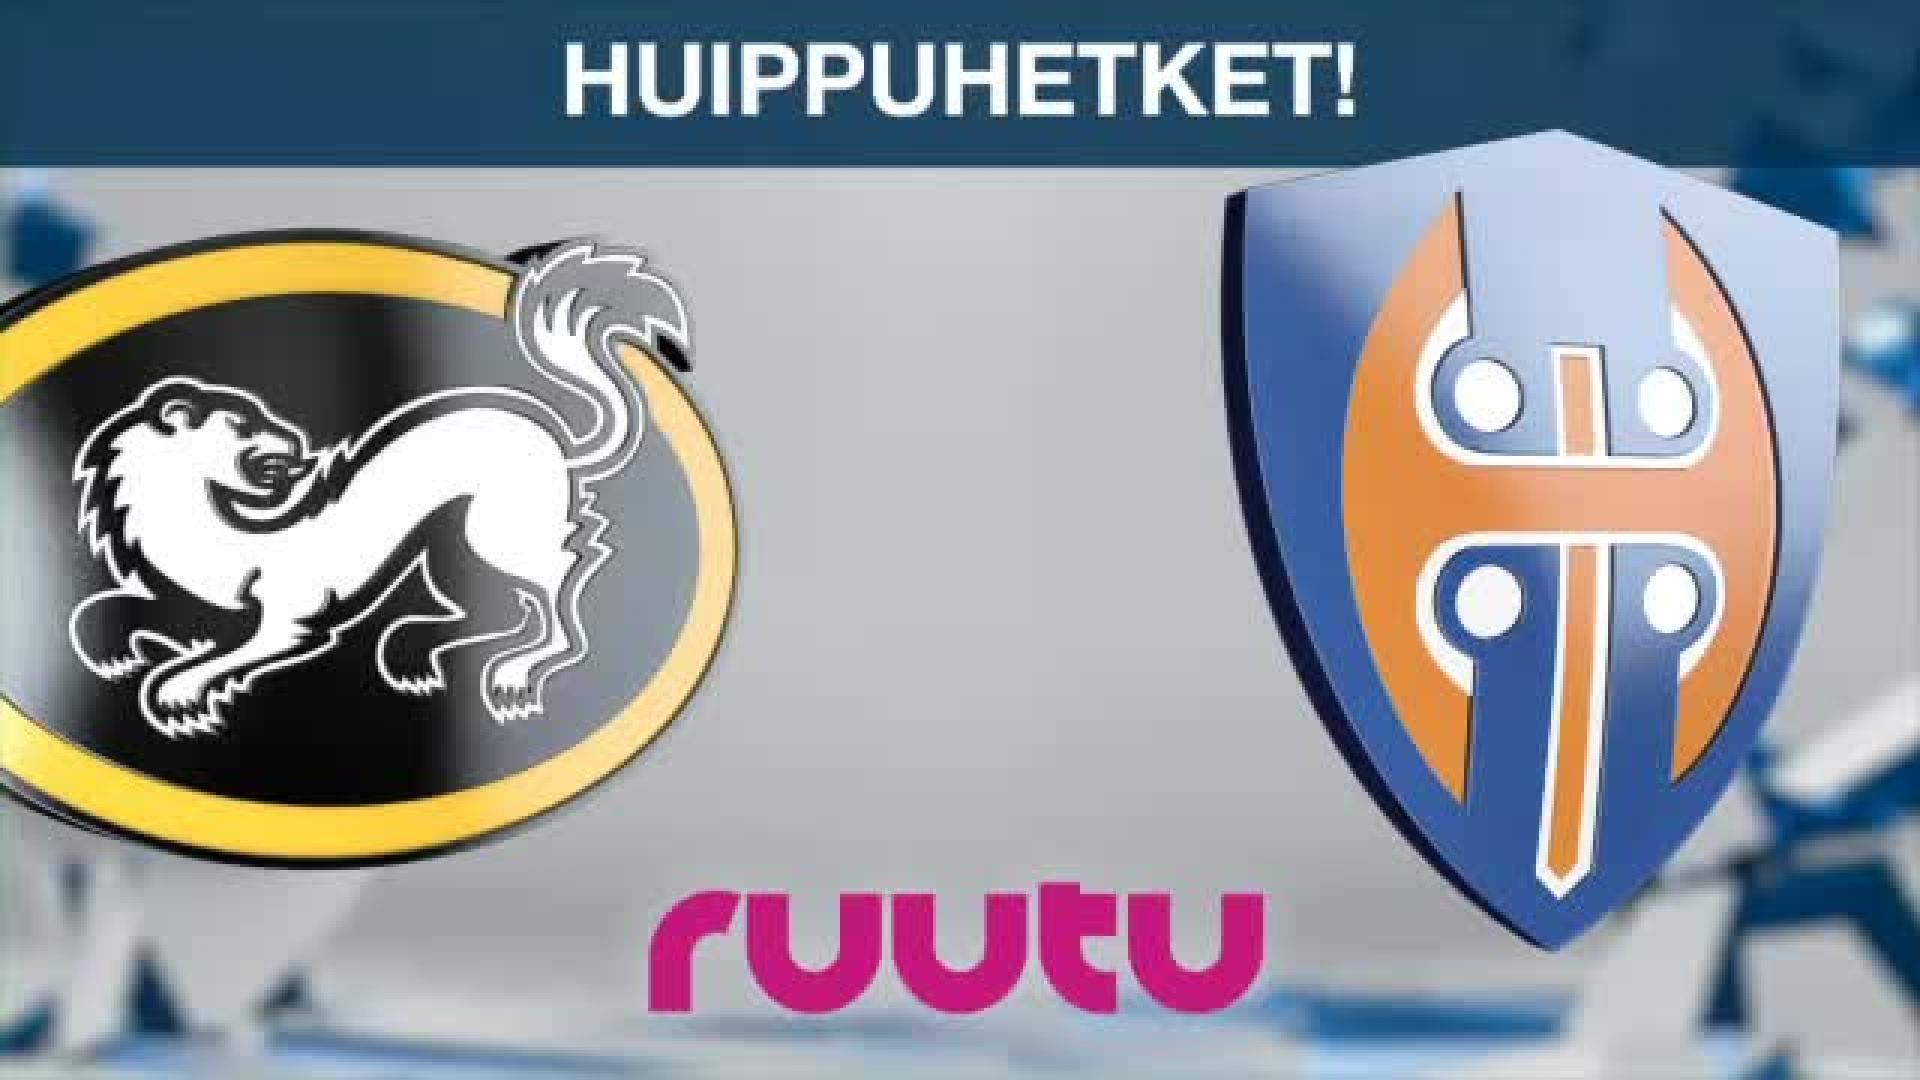 www.ruutu.fi